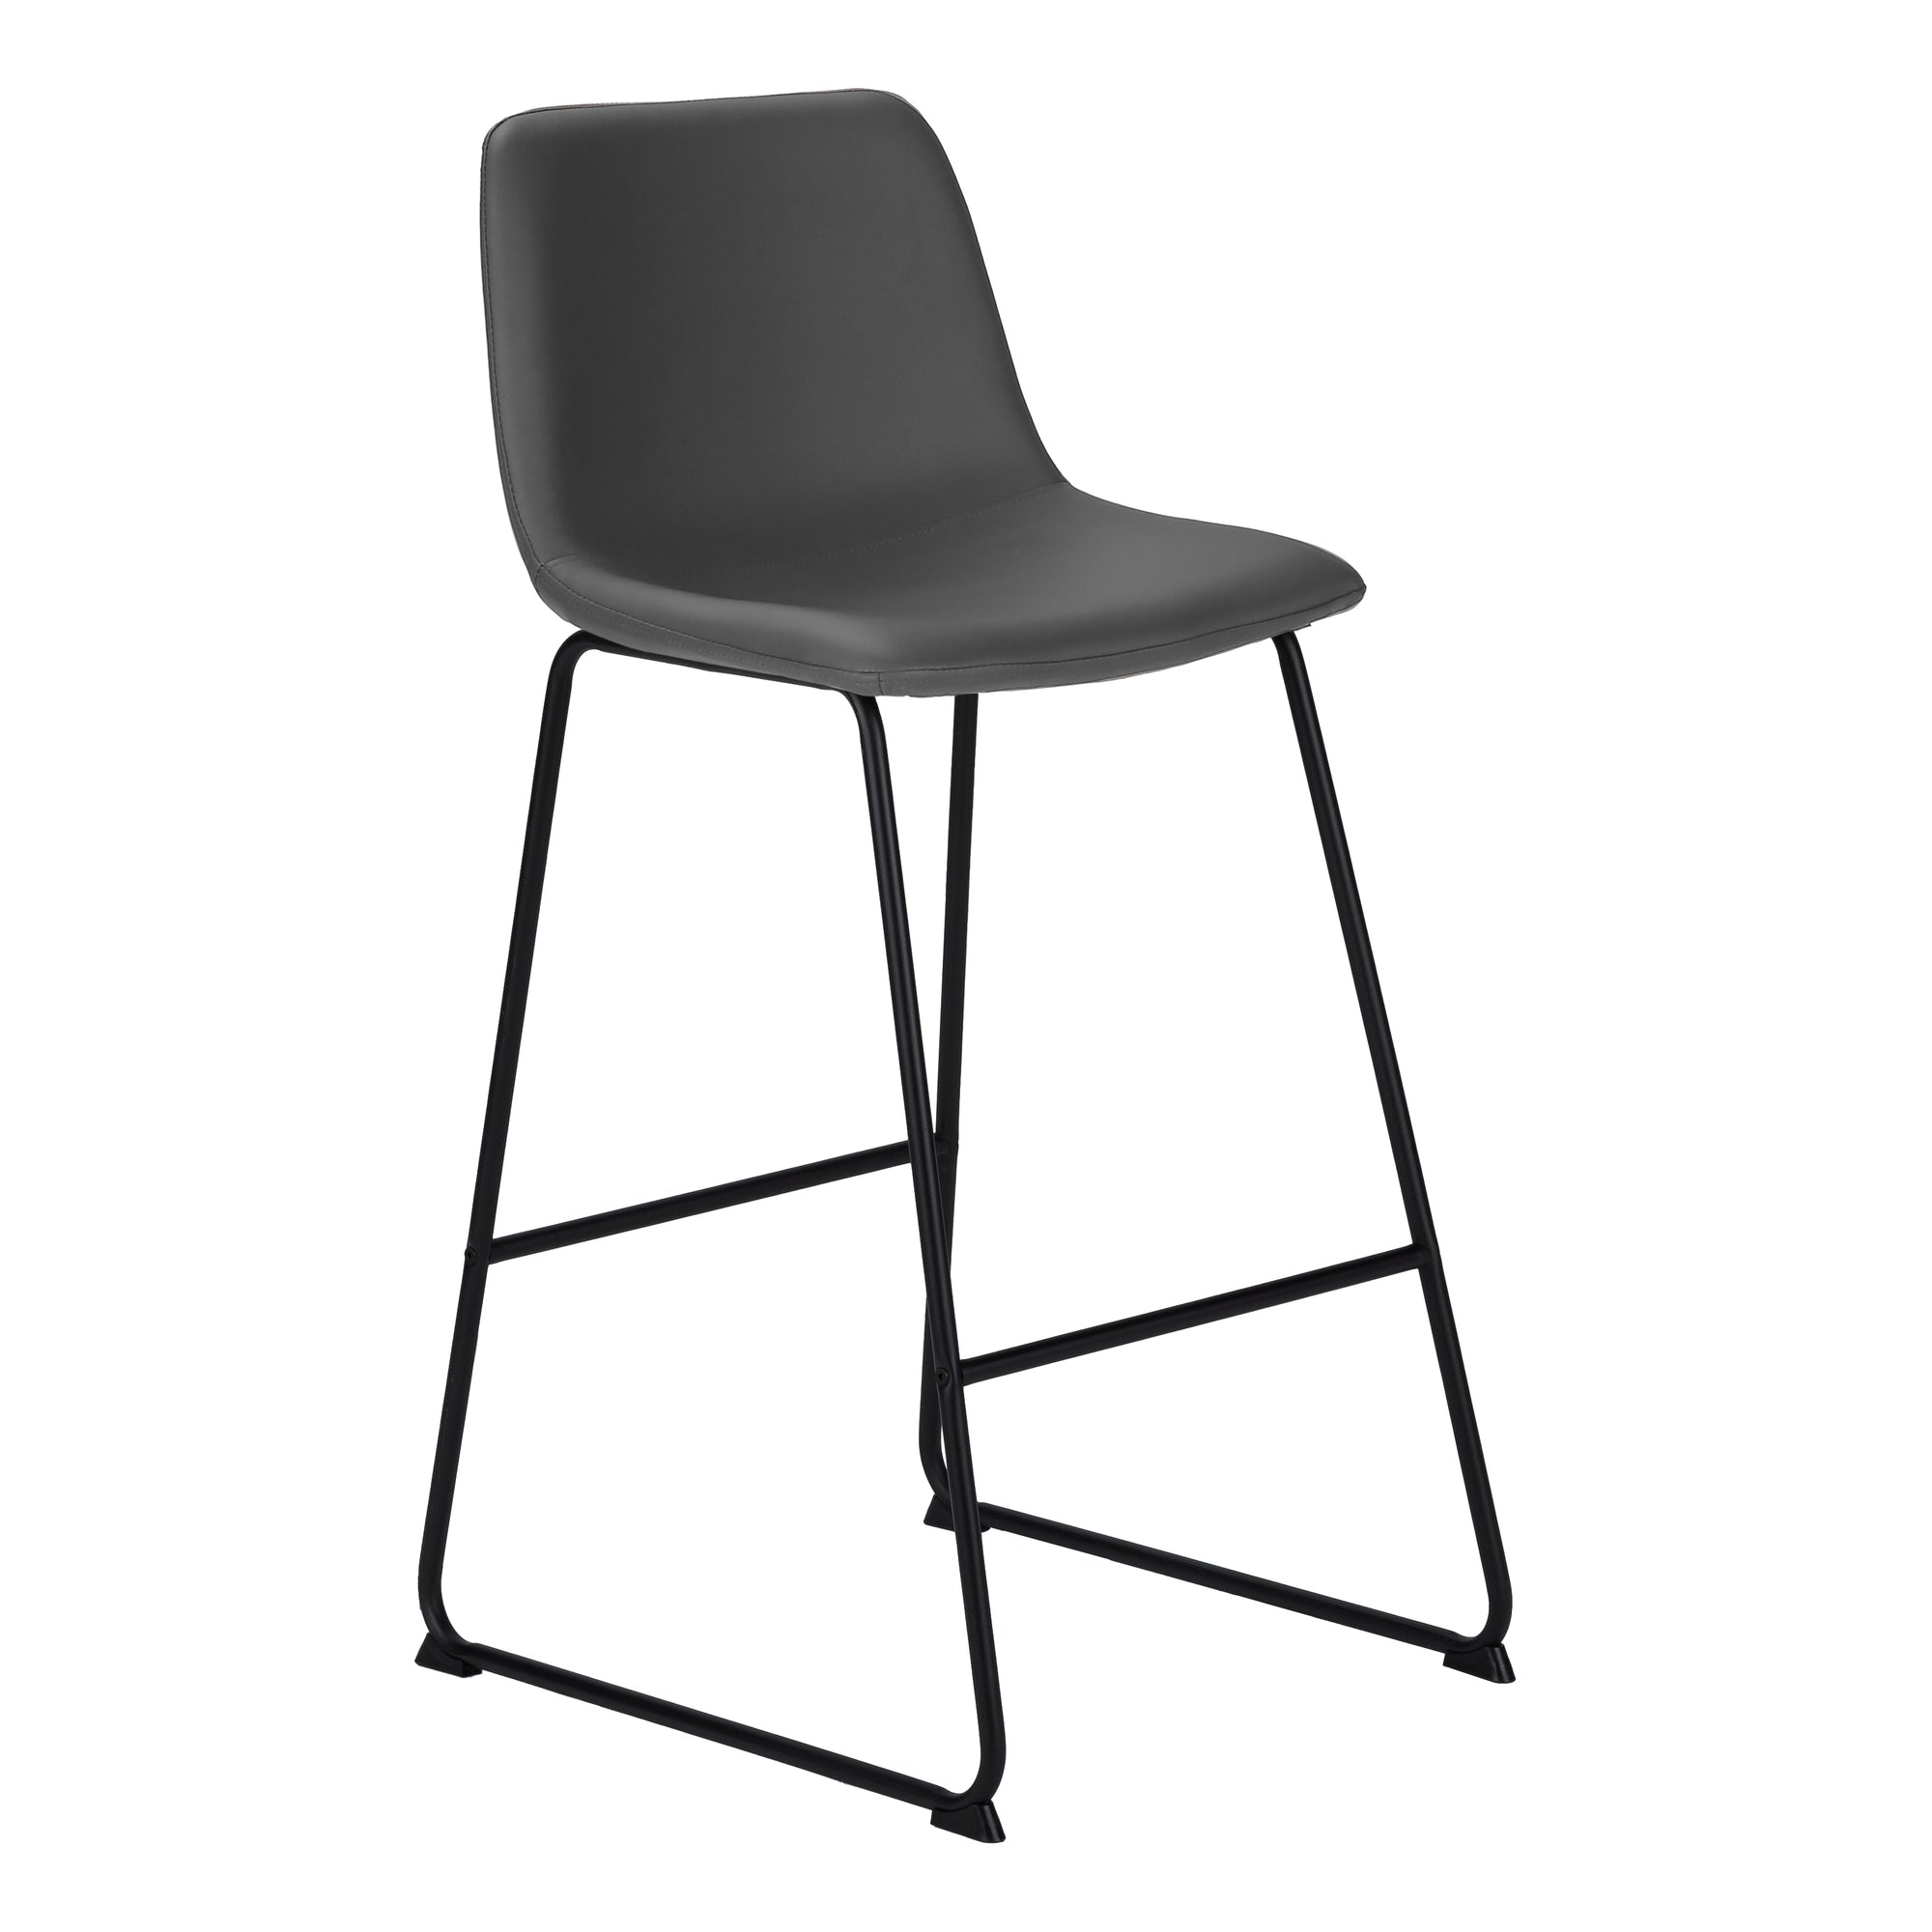 MN-117752    Office Chair - Standing Desk / Metal Frame - Curved Backrest / Grey Leather-Look / Black